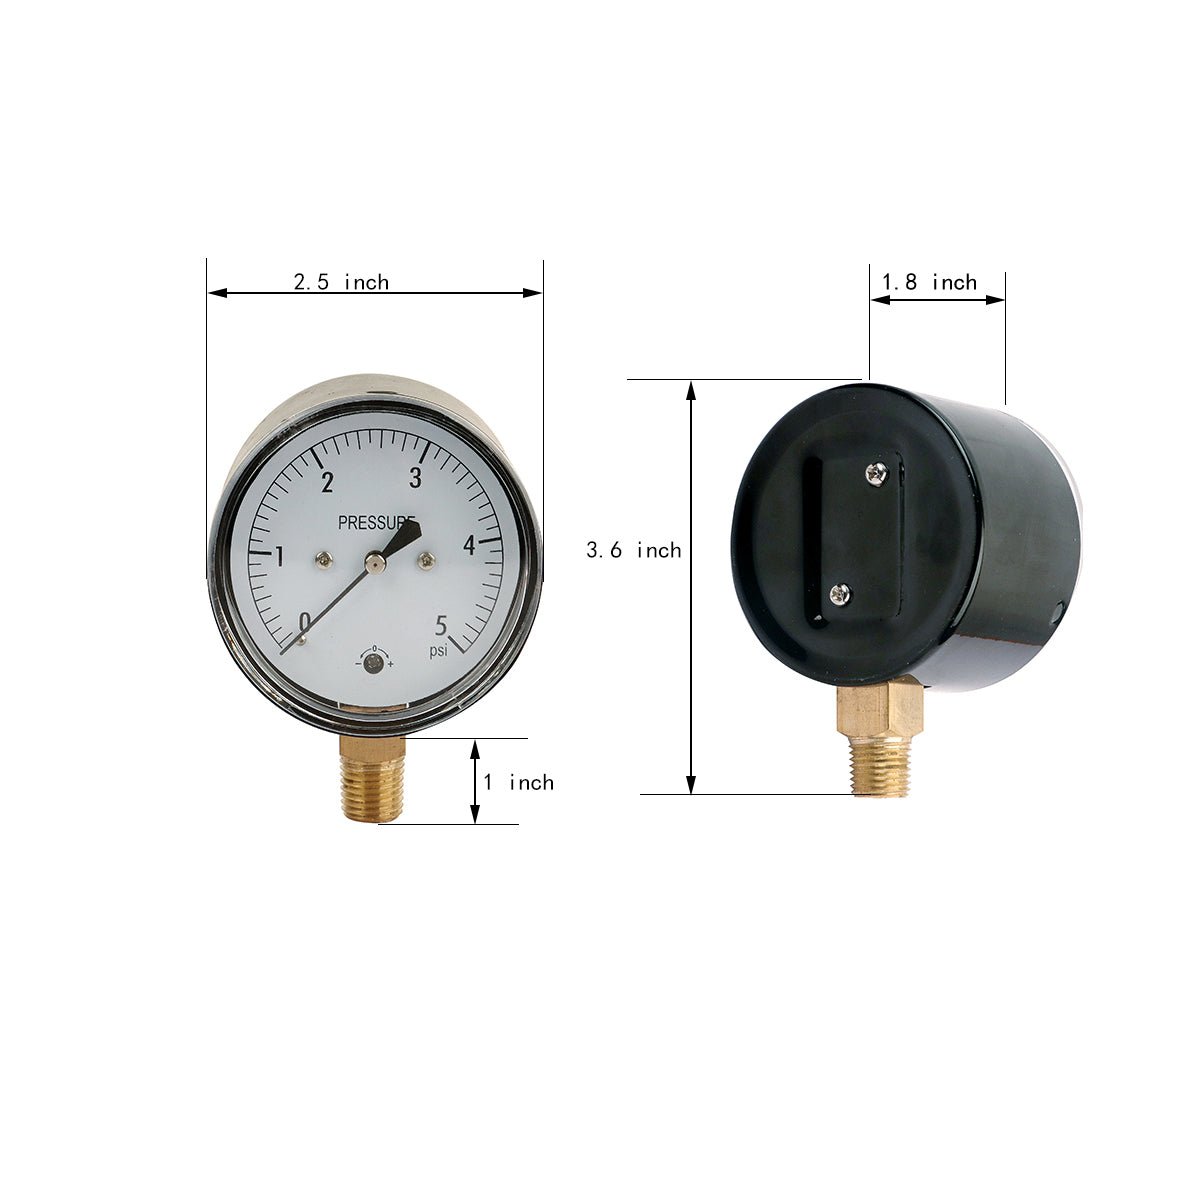 Low Capsule Pressure Gauge, 2-1/2" Dial, 1/4" NPT Brass Connection (Bottom Mount), Zero Adjustment, Safety Glass Window, Black Steel case - JIVTO